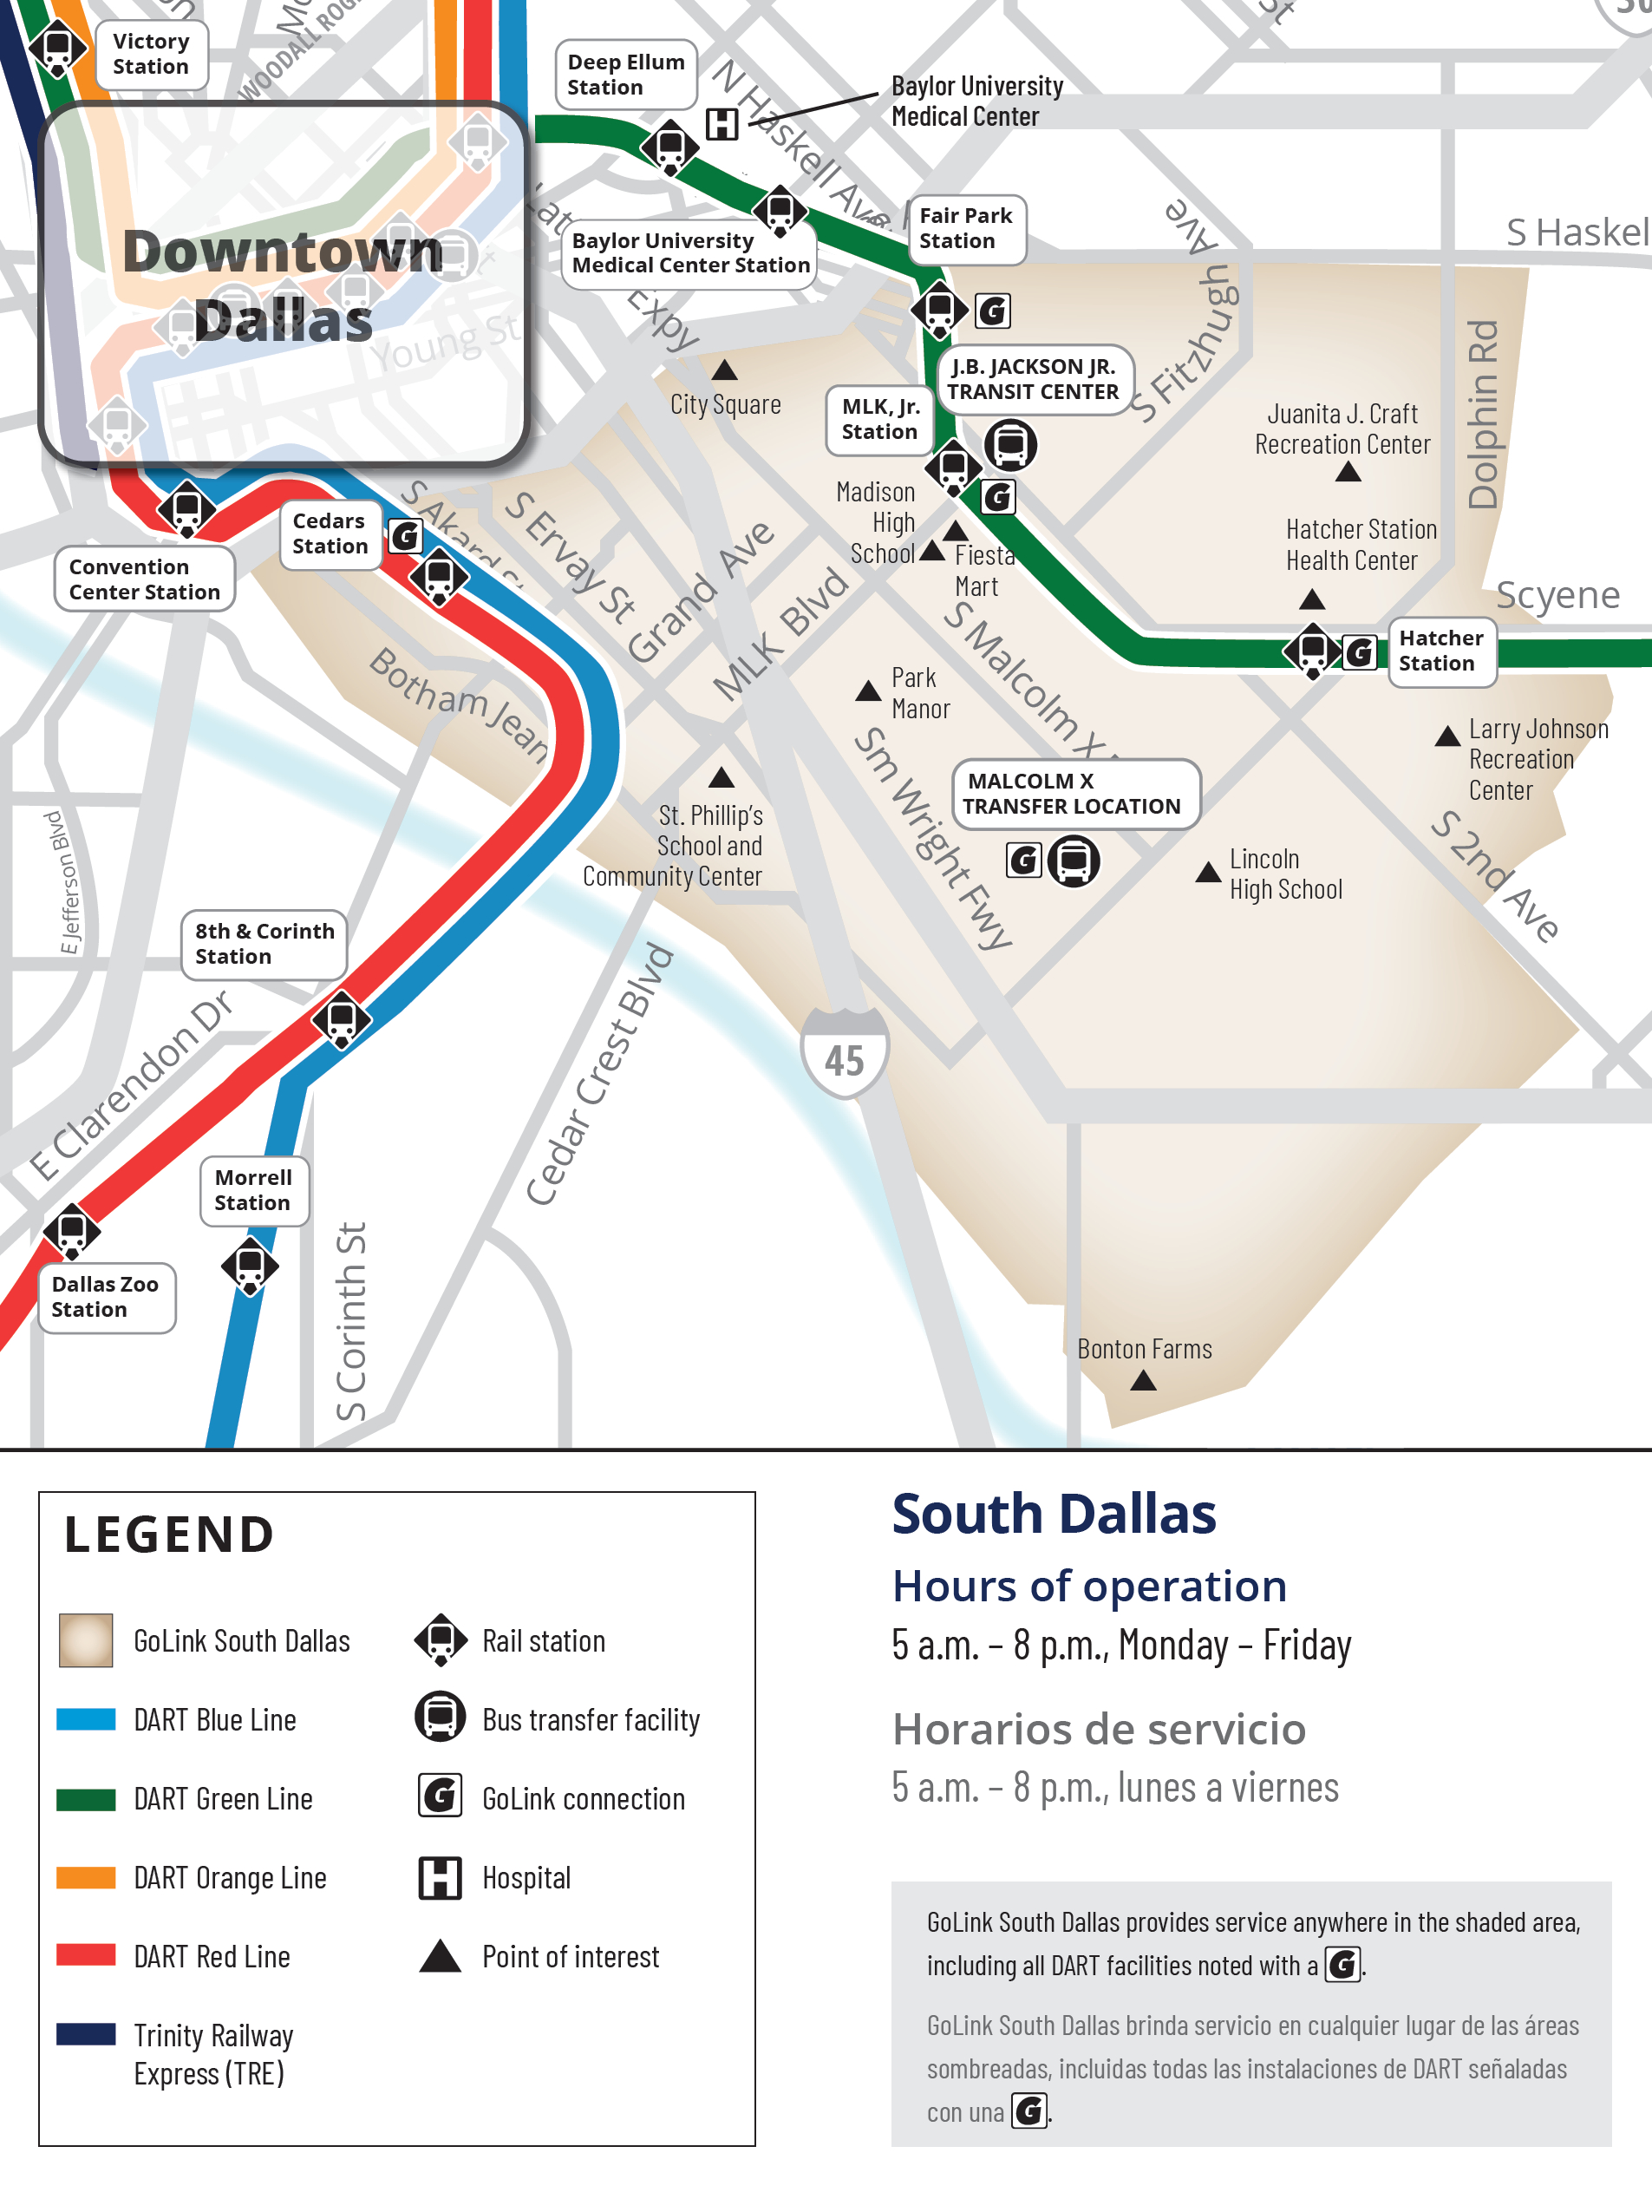 South-Dallas-GoLink-Map_postupdate